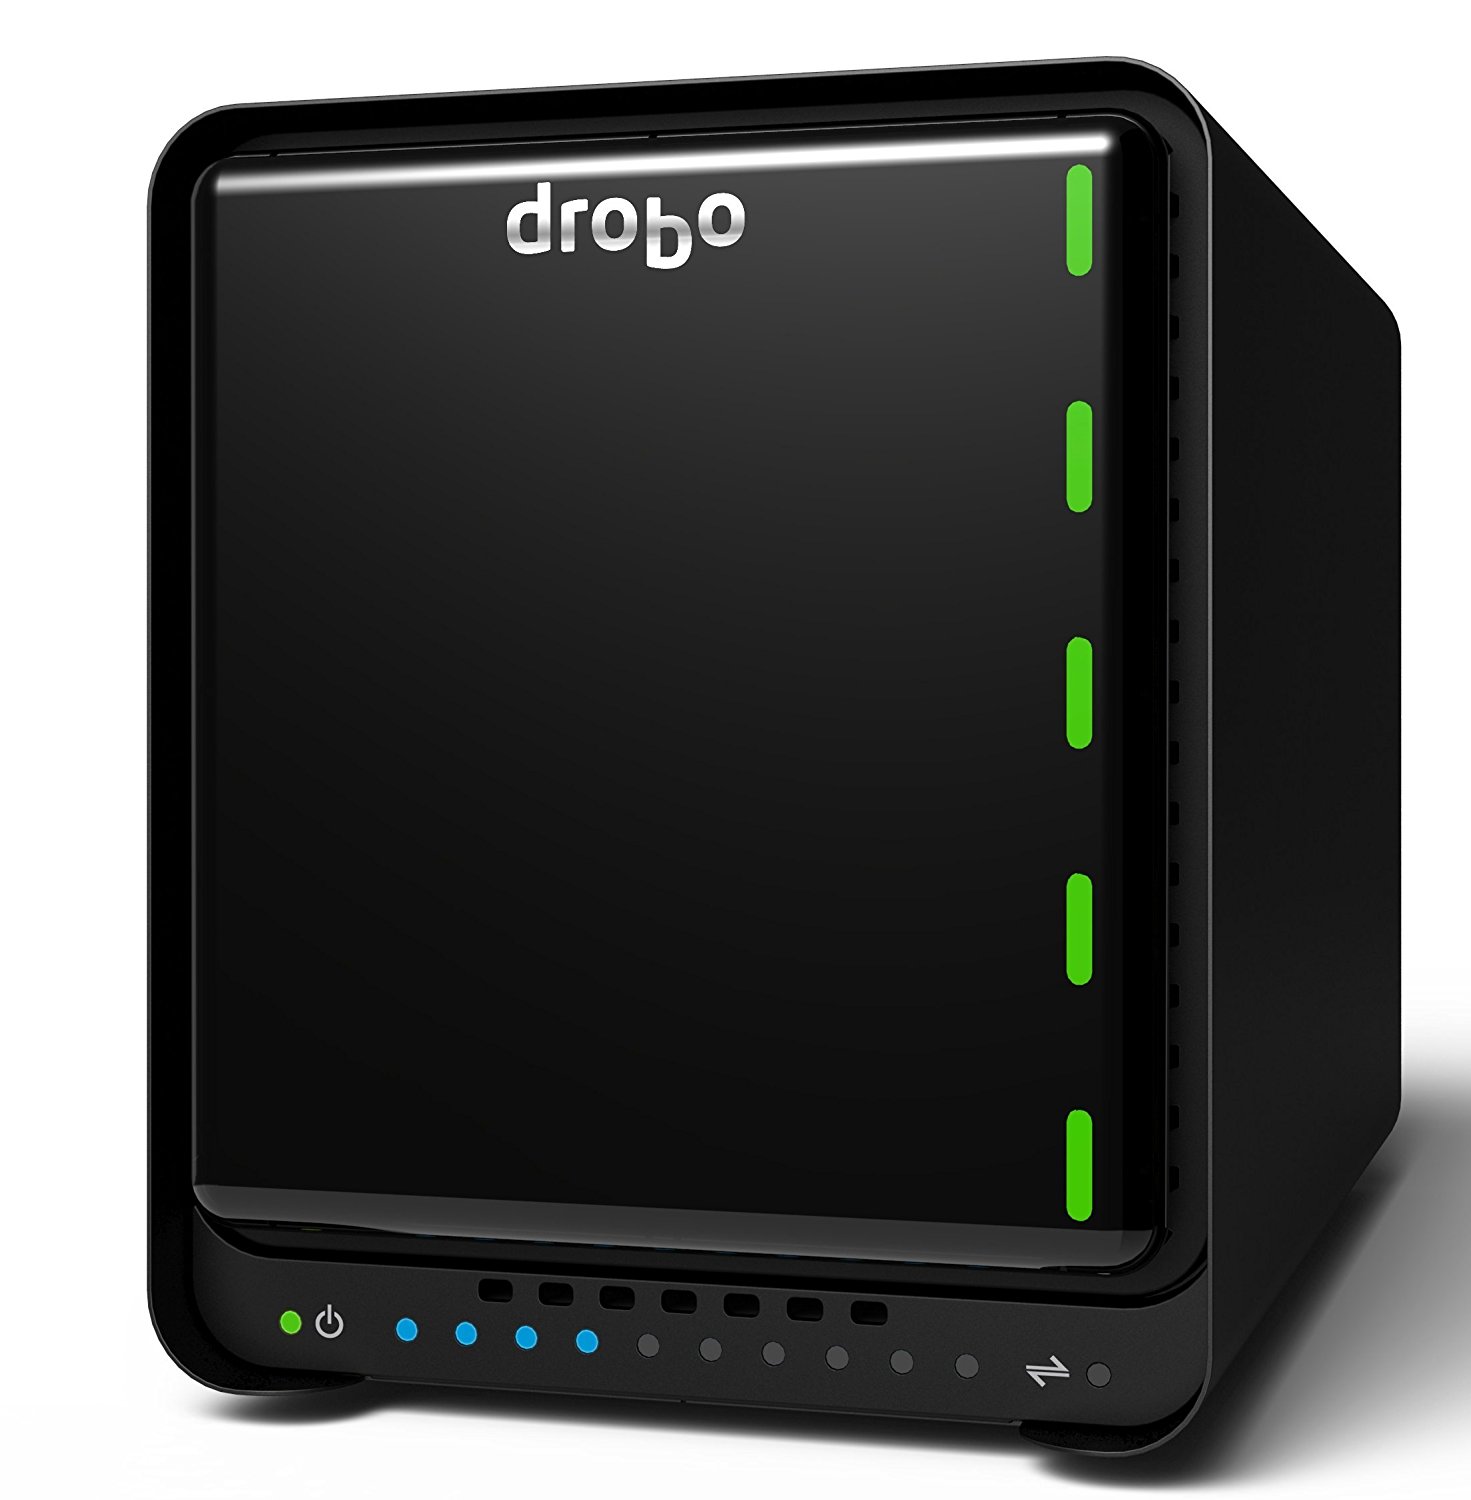 PC- Drobo direct Drobo 5D3 5-Drive Direct Attached Storage (DAS) Array - Dual Thunderbolt 3 e portas USB 3.0 tipo C (DRDR6A21)